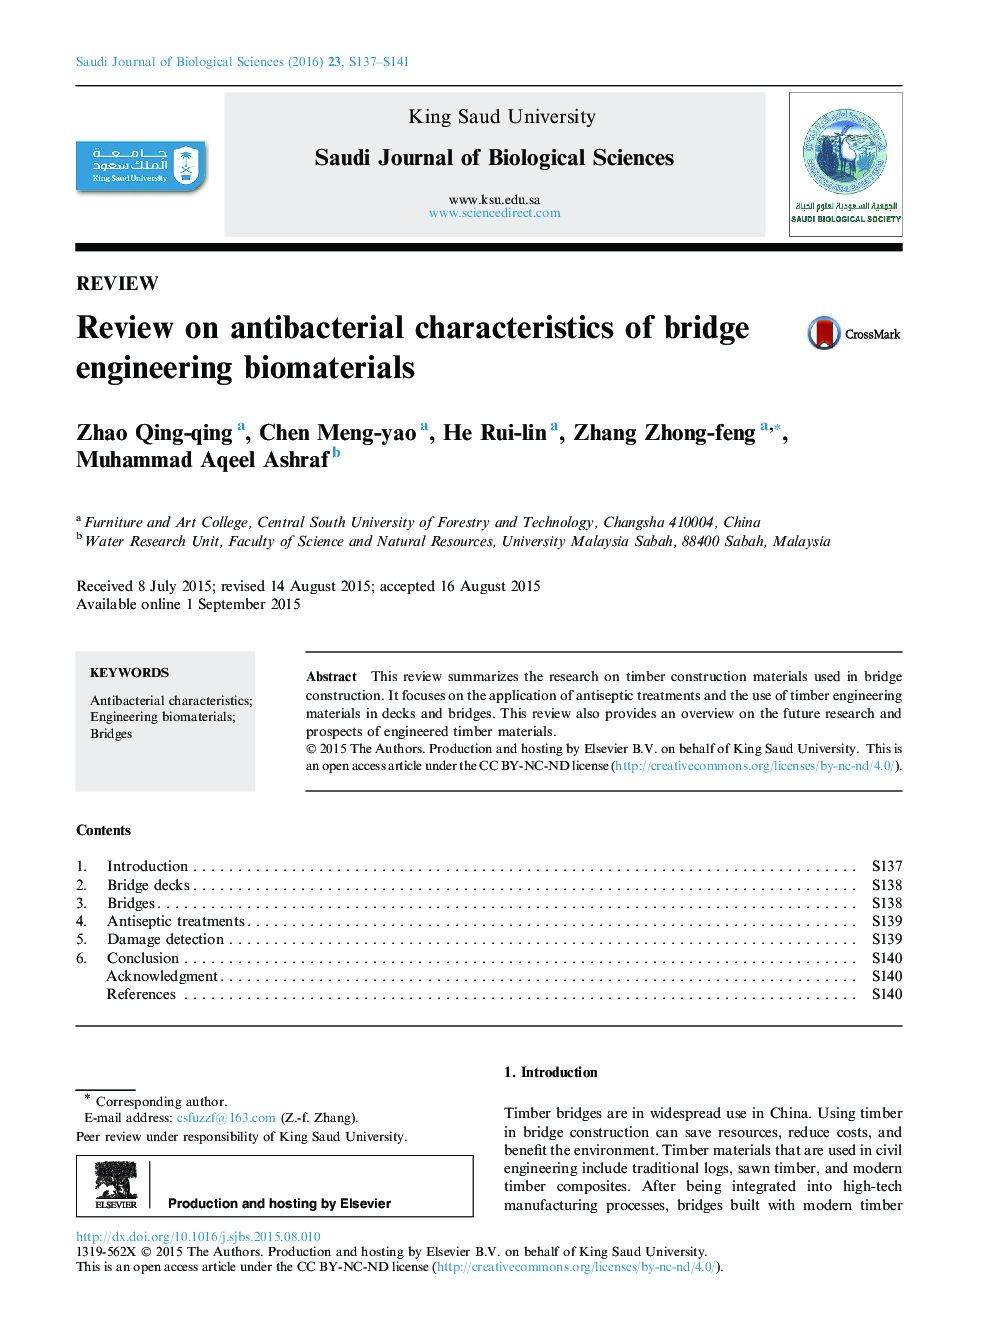 Review on antibacterial characteristics of bridge engineering biomaterials 